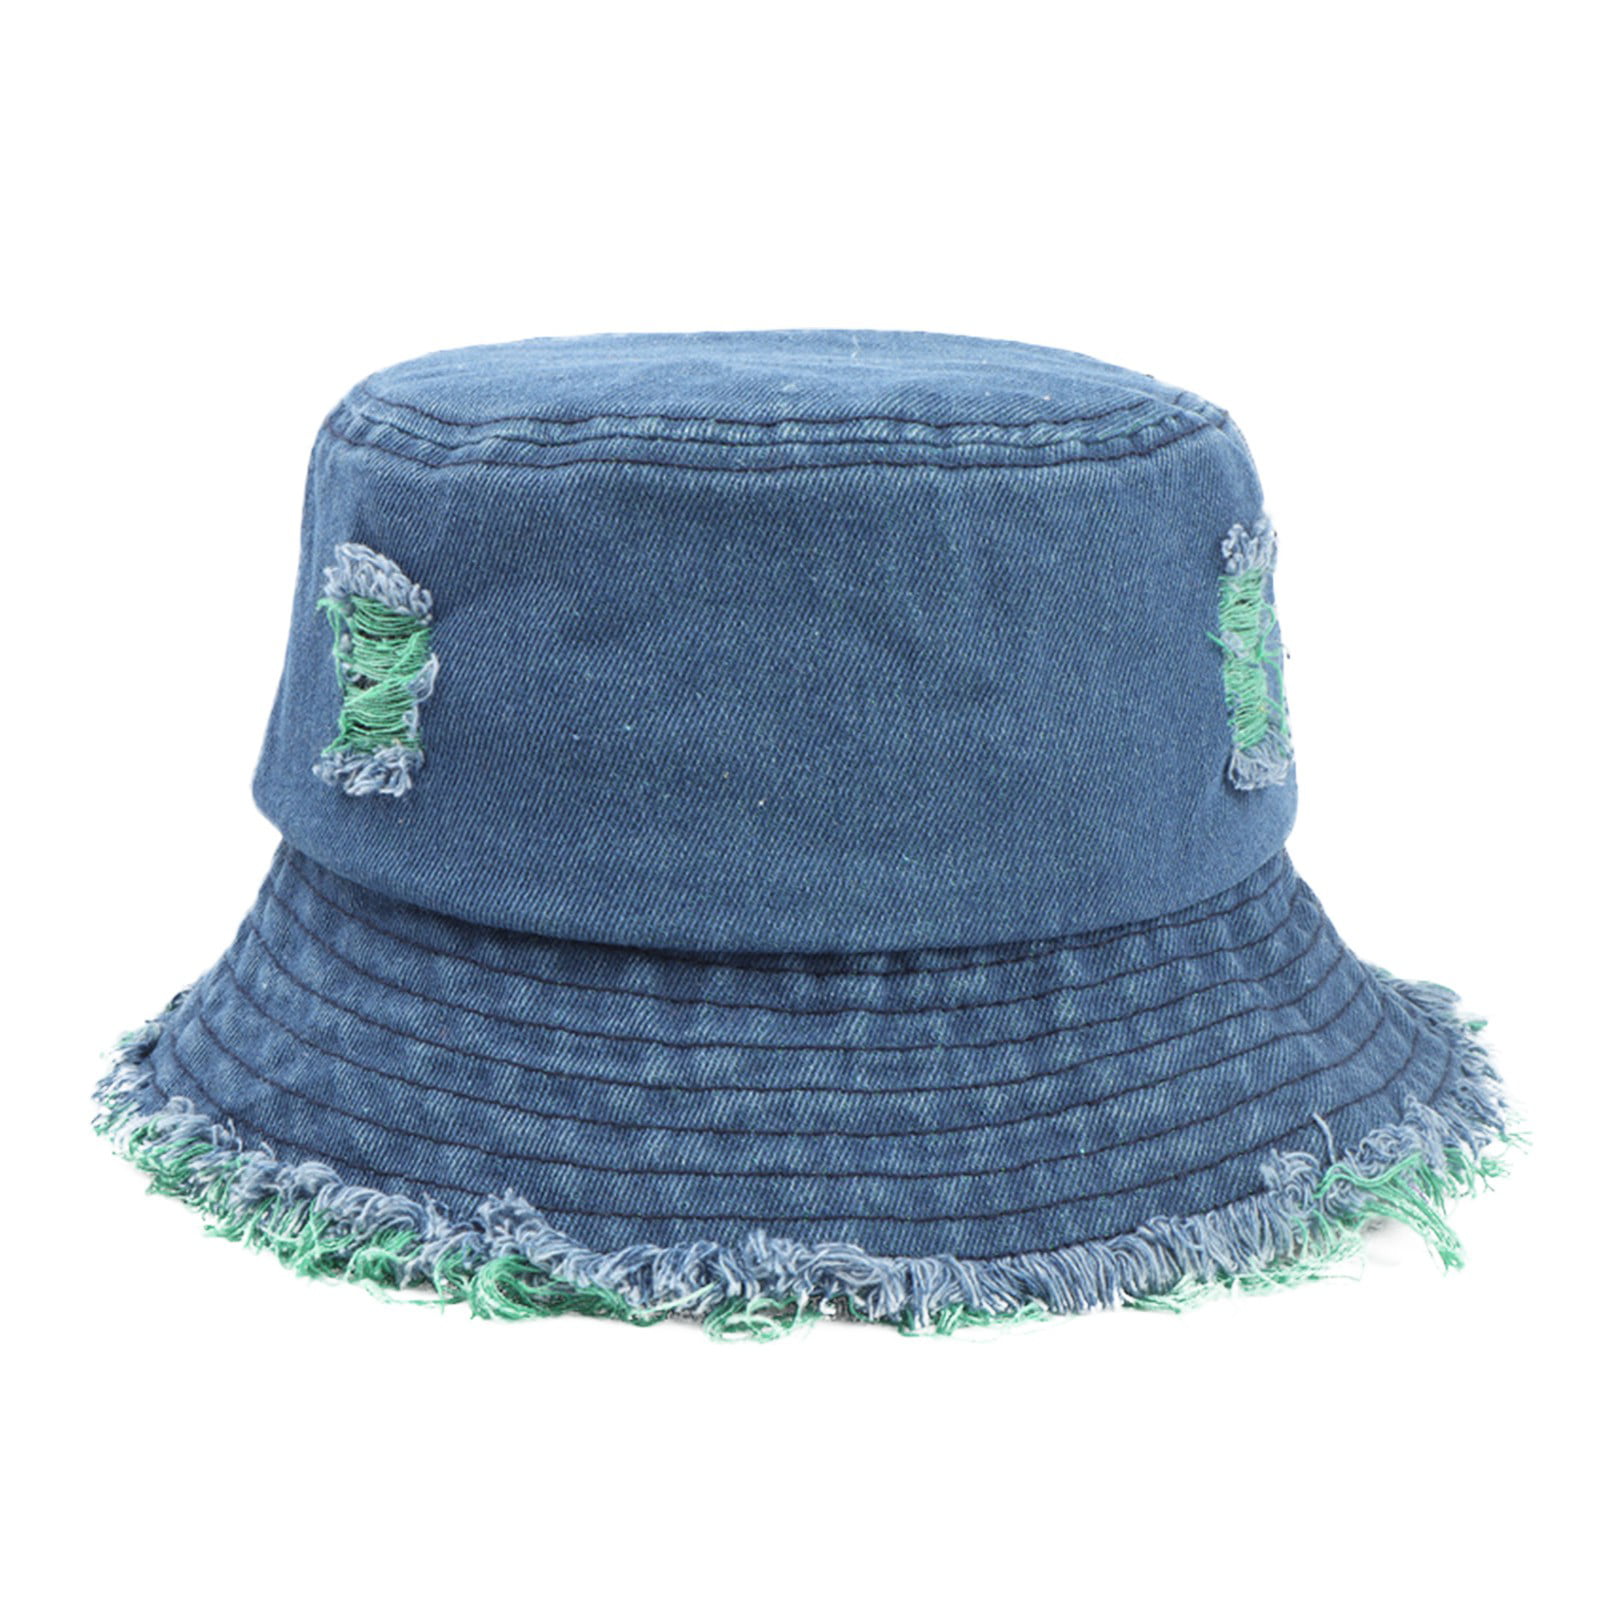 Bucket Hats Jean Washed Denim Teens Women Frayed Ripped Vintage Fisherman Cap 